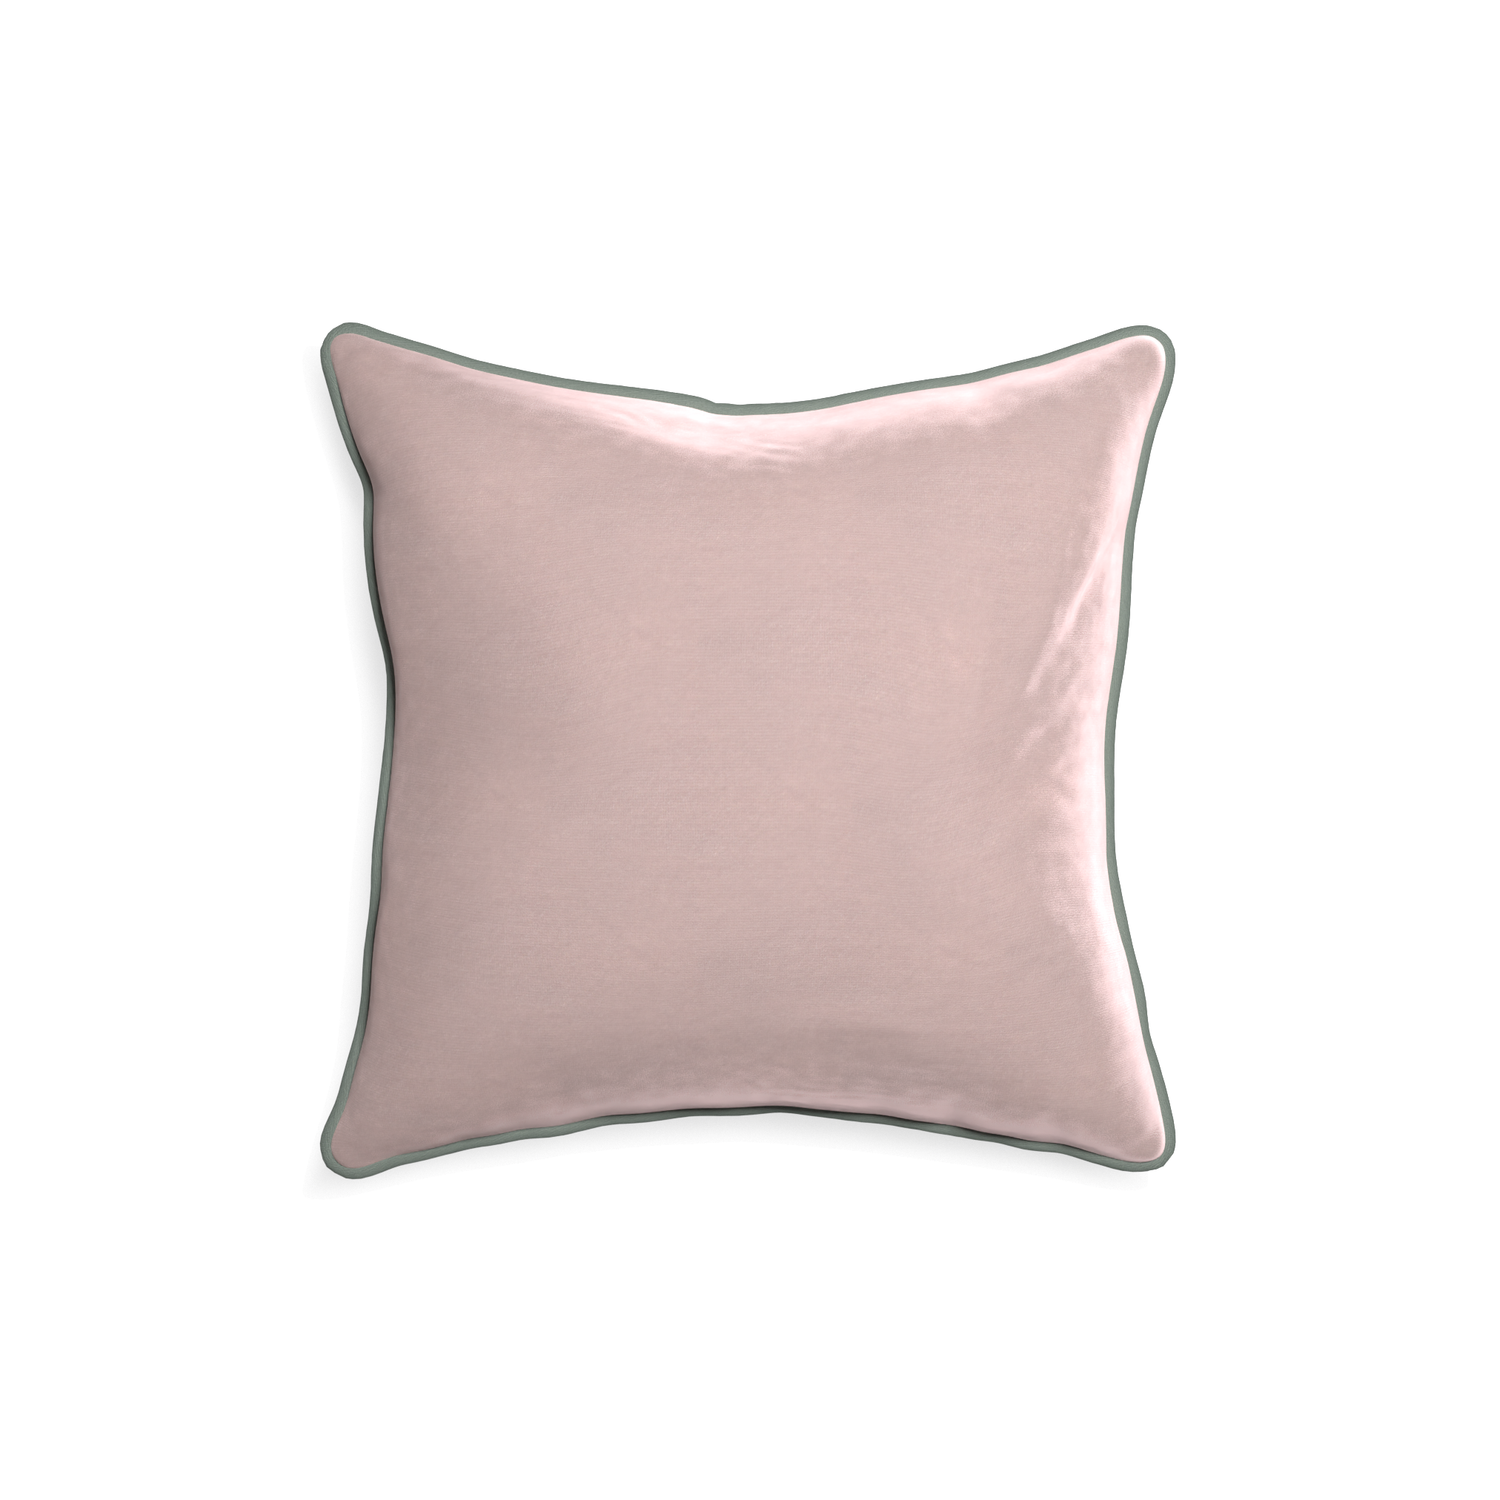 18-square rose velvet custom light pinkpillow with sage piping on white background